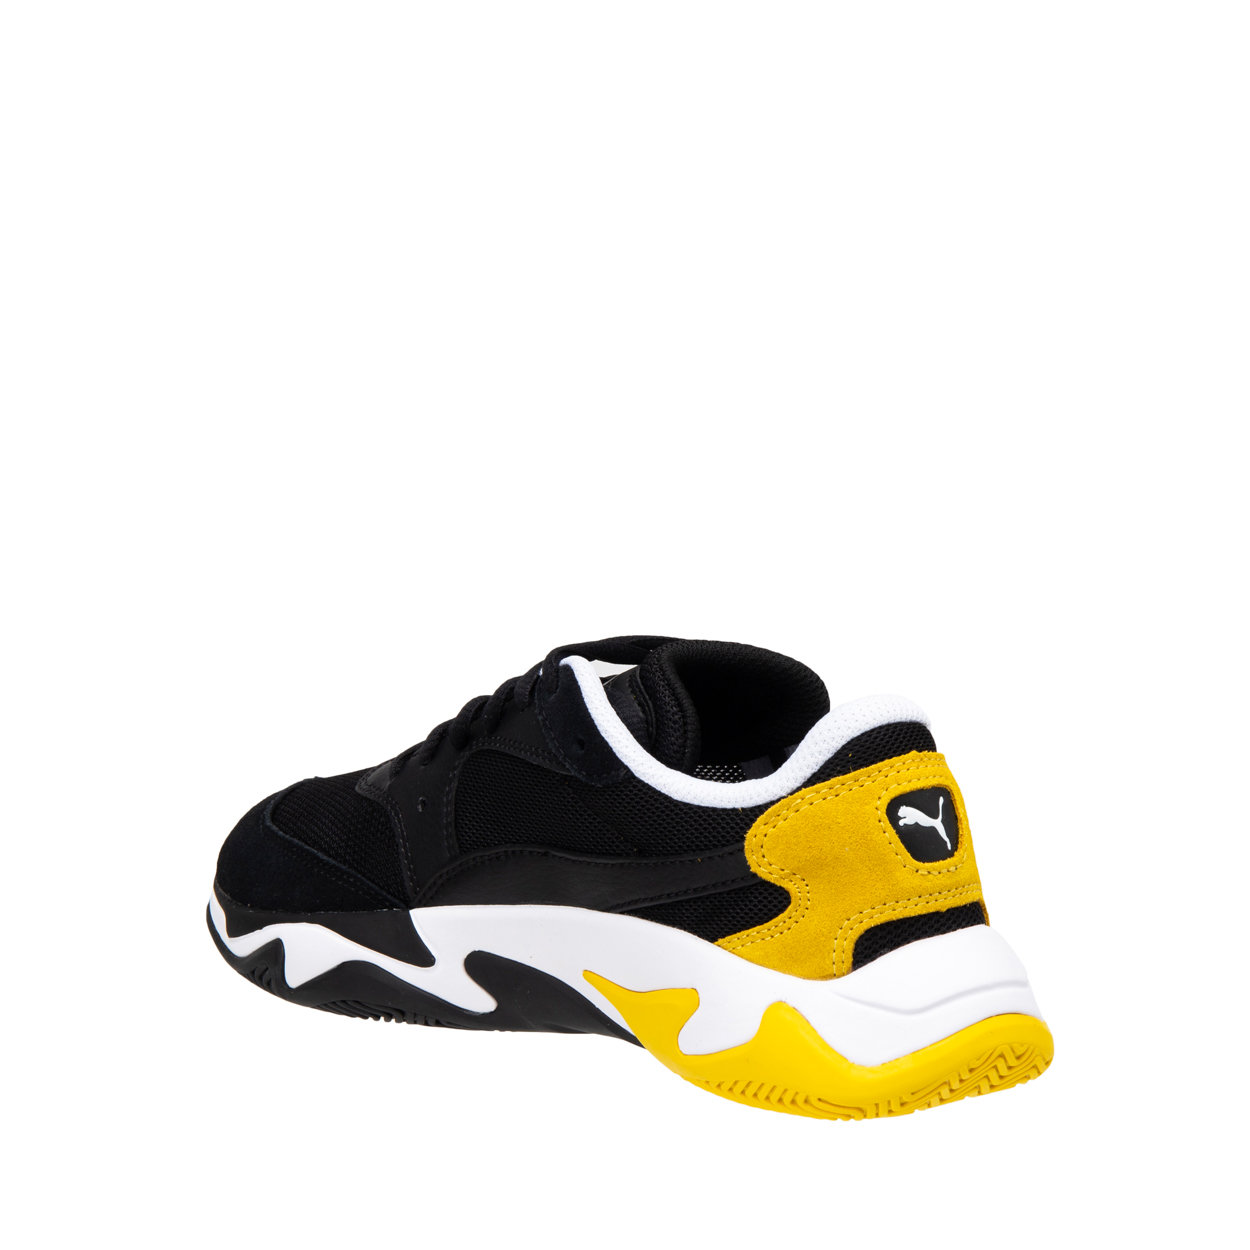 Black Puma Storm adrenaline sneakers - Puma - Purchase on Ventis.